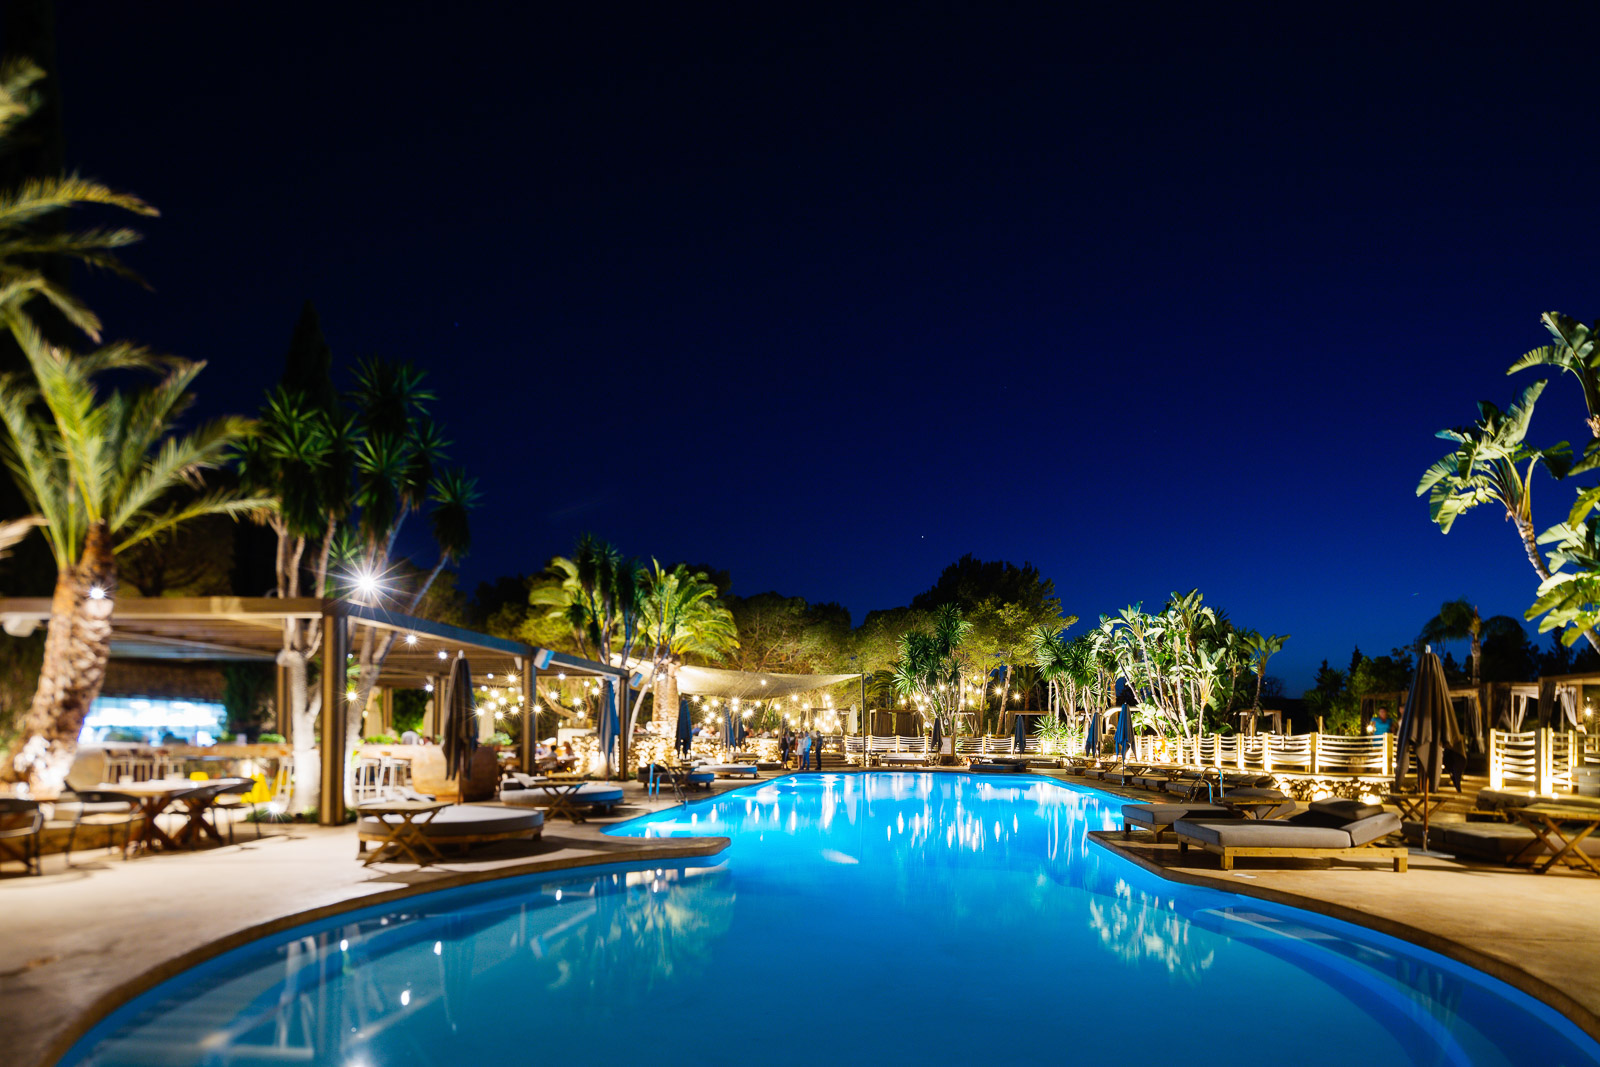  Nao Pool Club in Marbella by EstudioIN 